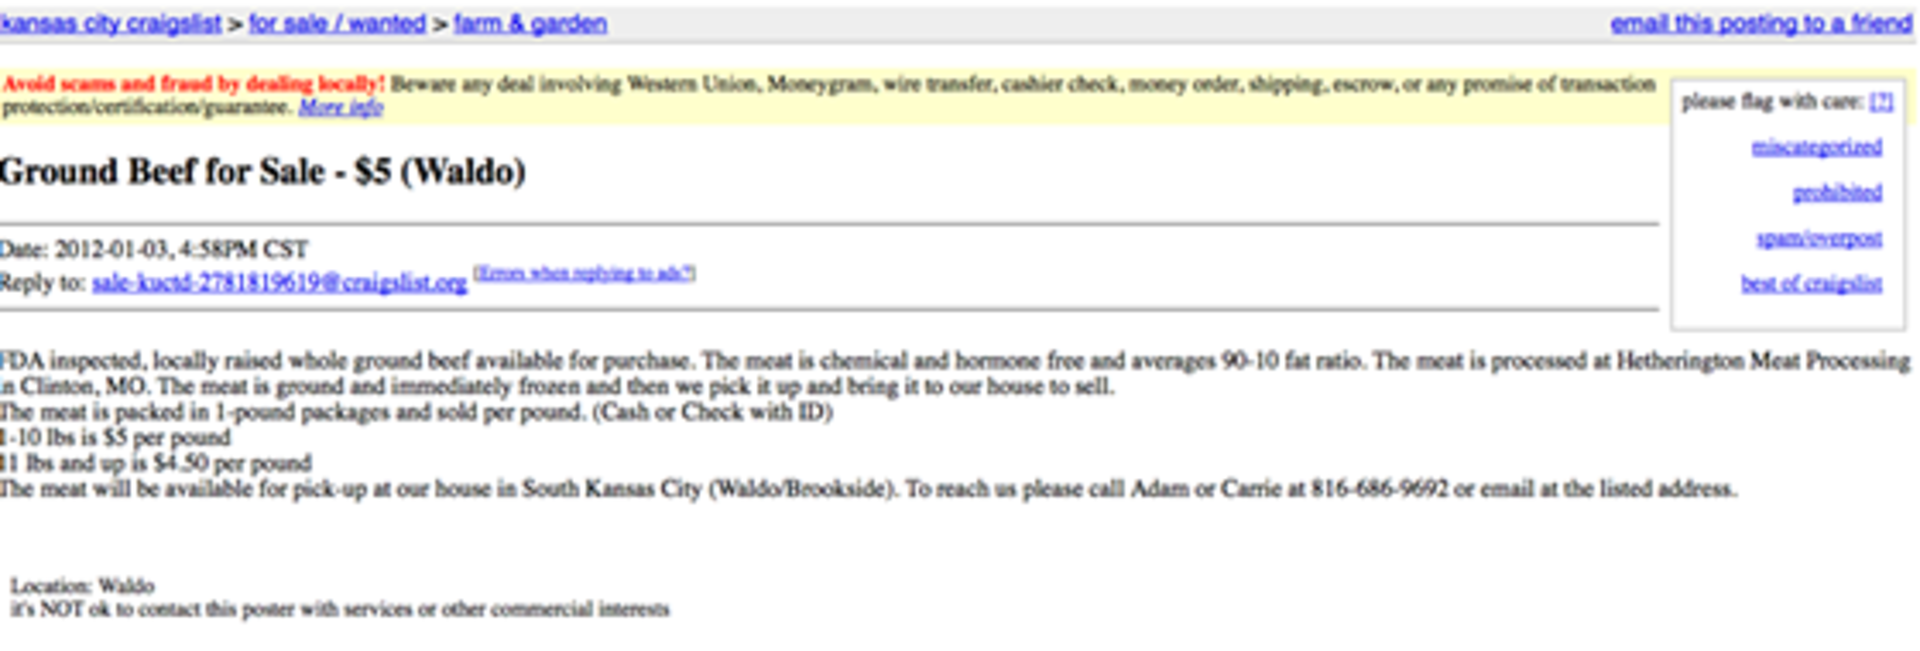 abood samy recommends Can City Missouri Craigslist